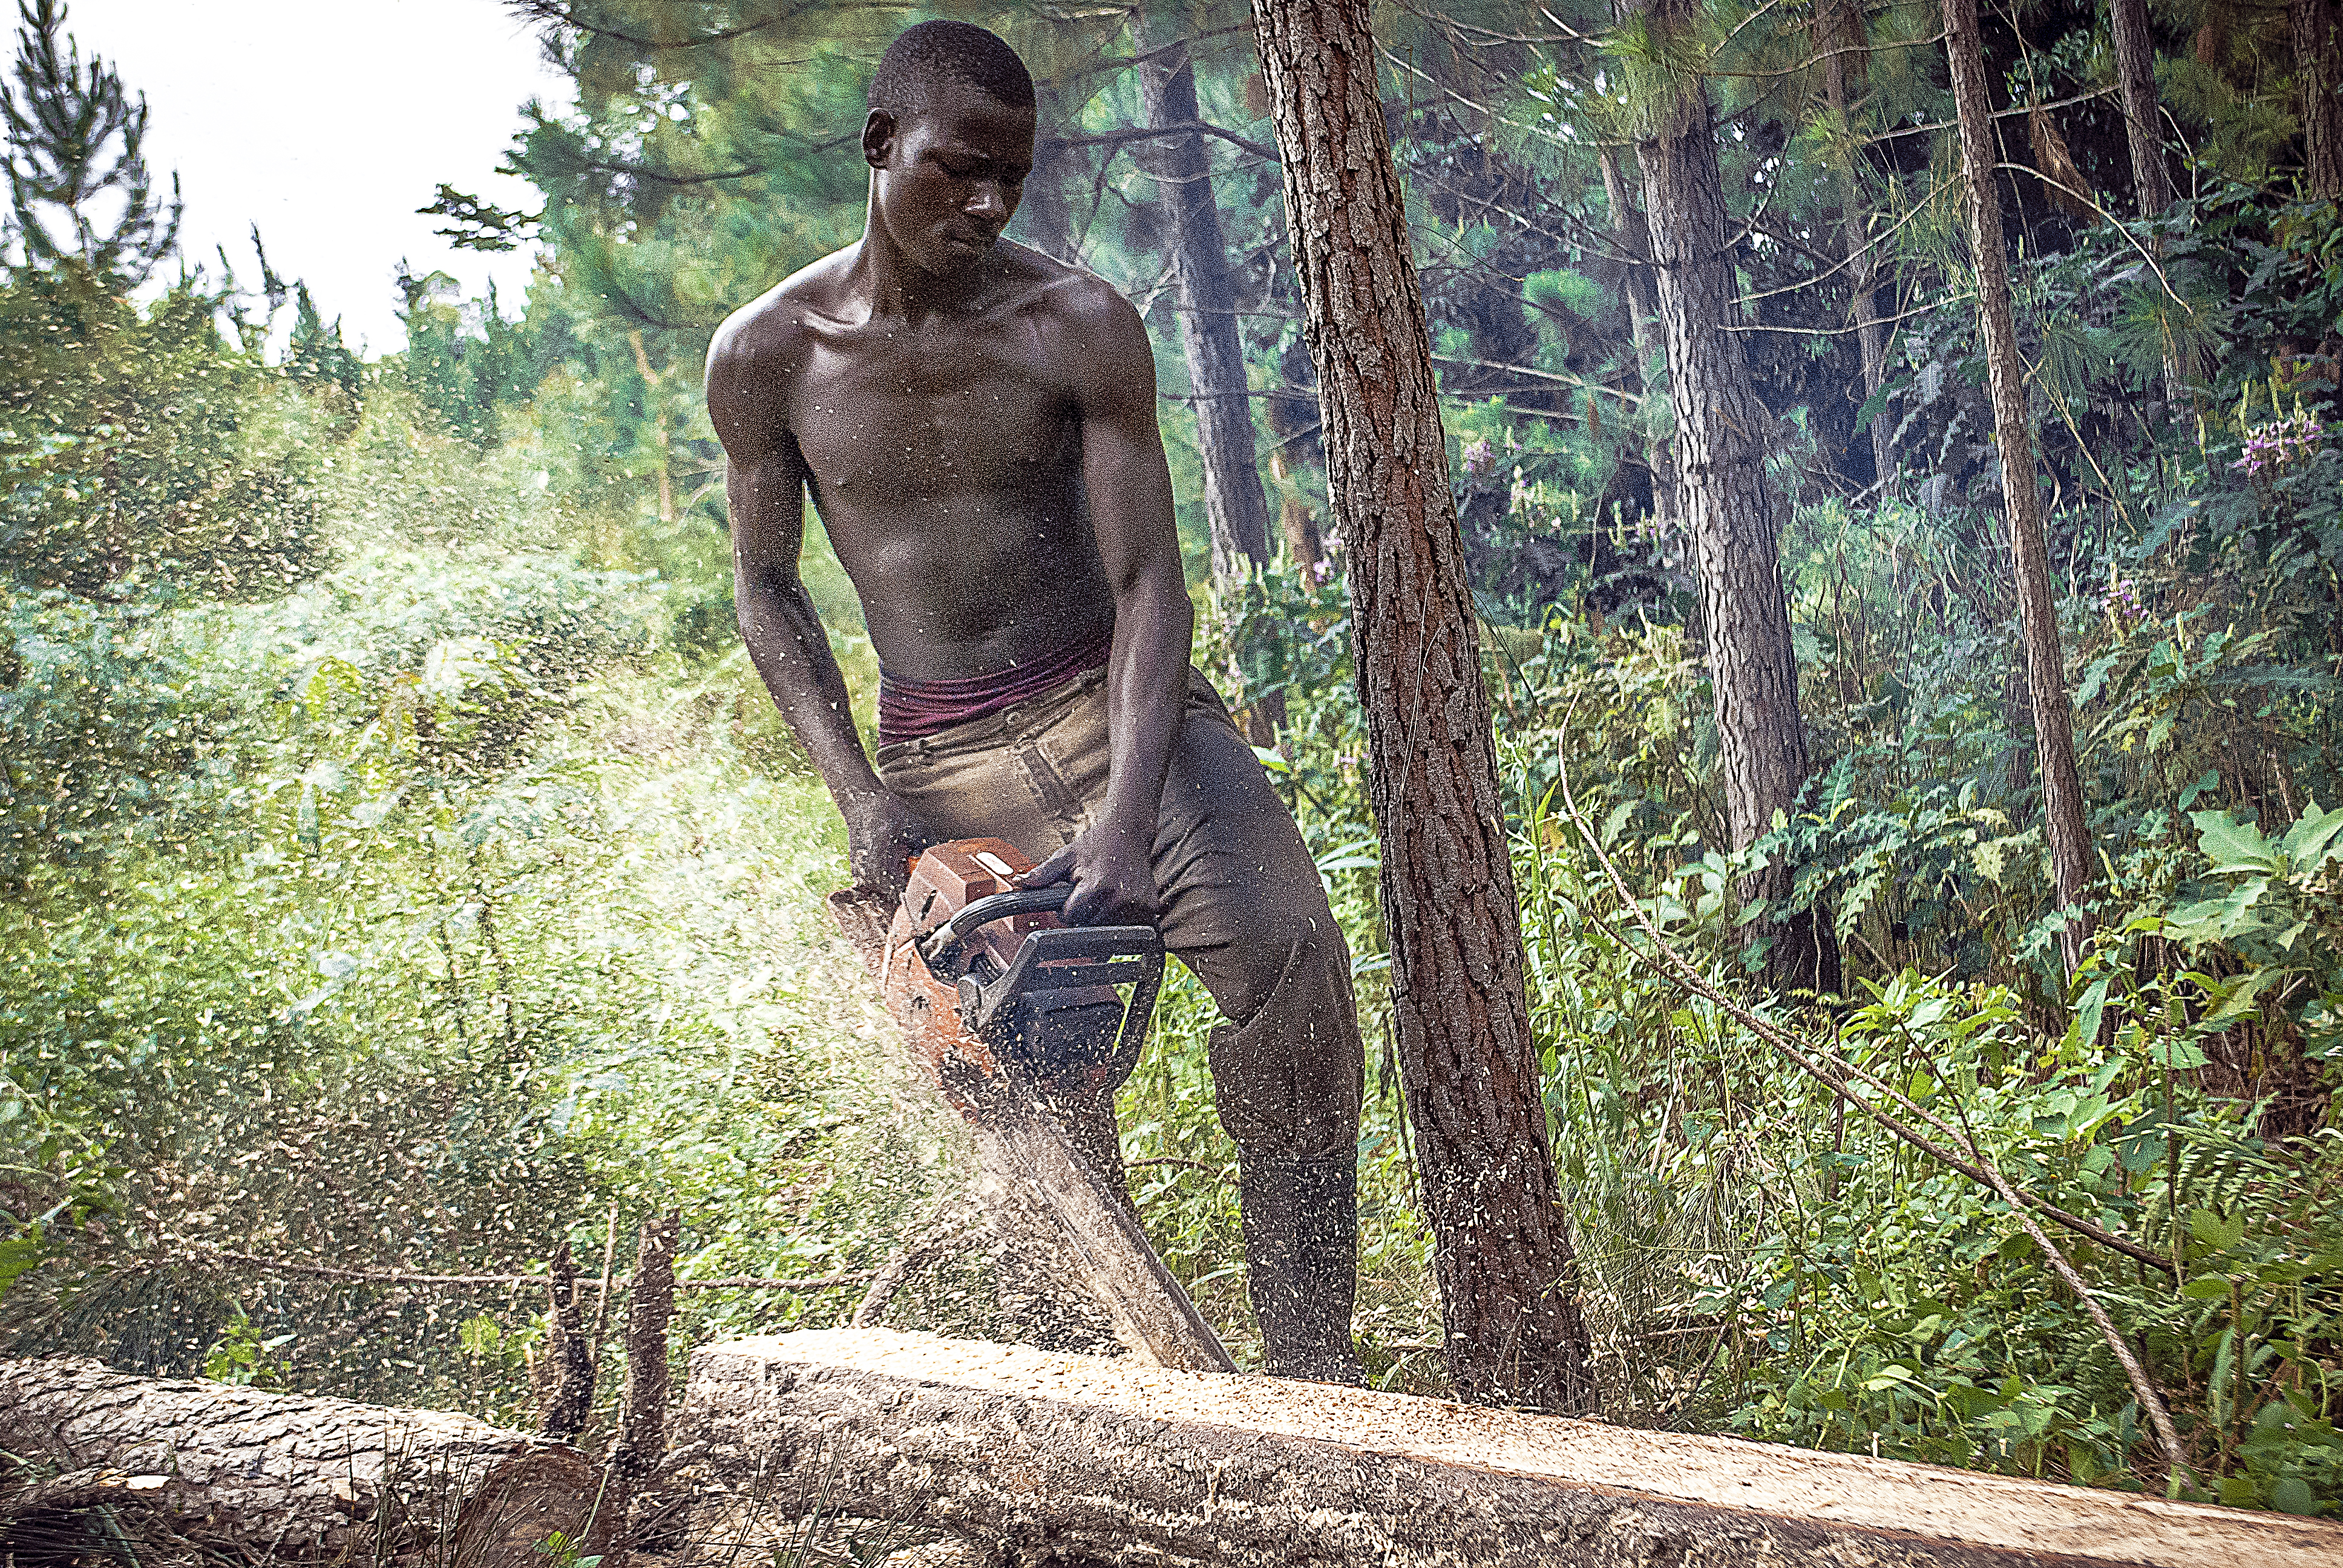 A lumberjack cutting a tree log